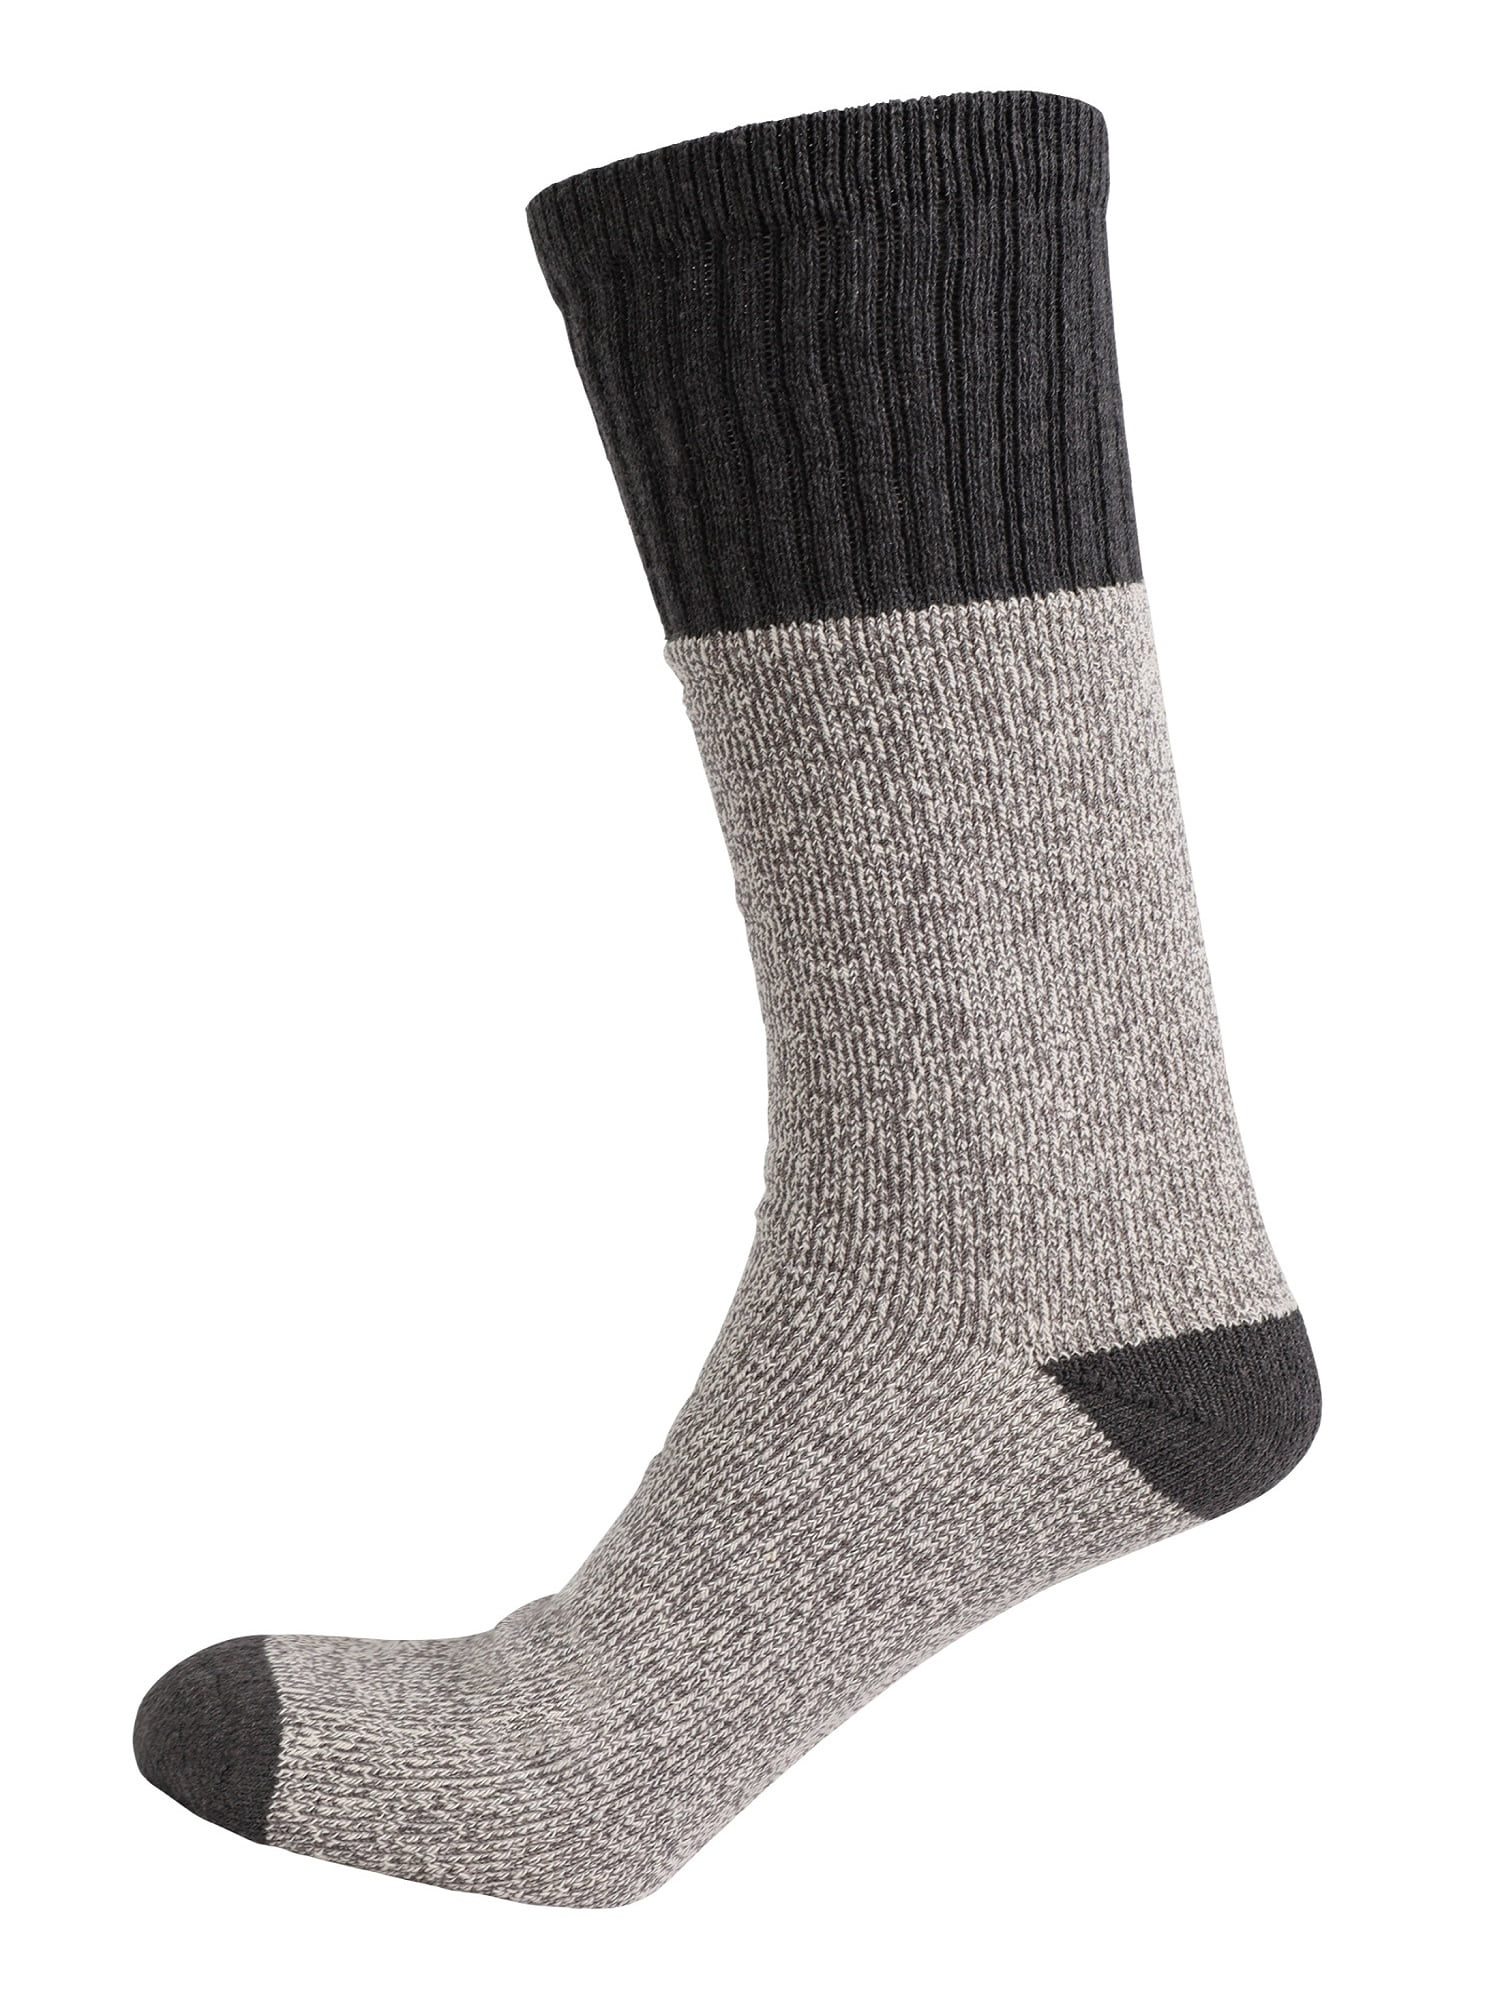 LAY Mens 6-11 Black Extreme Merino Wool Thick Work Boot Socks